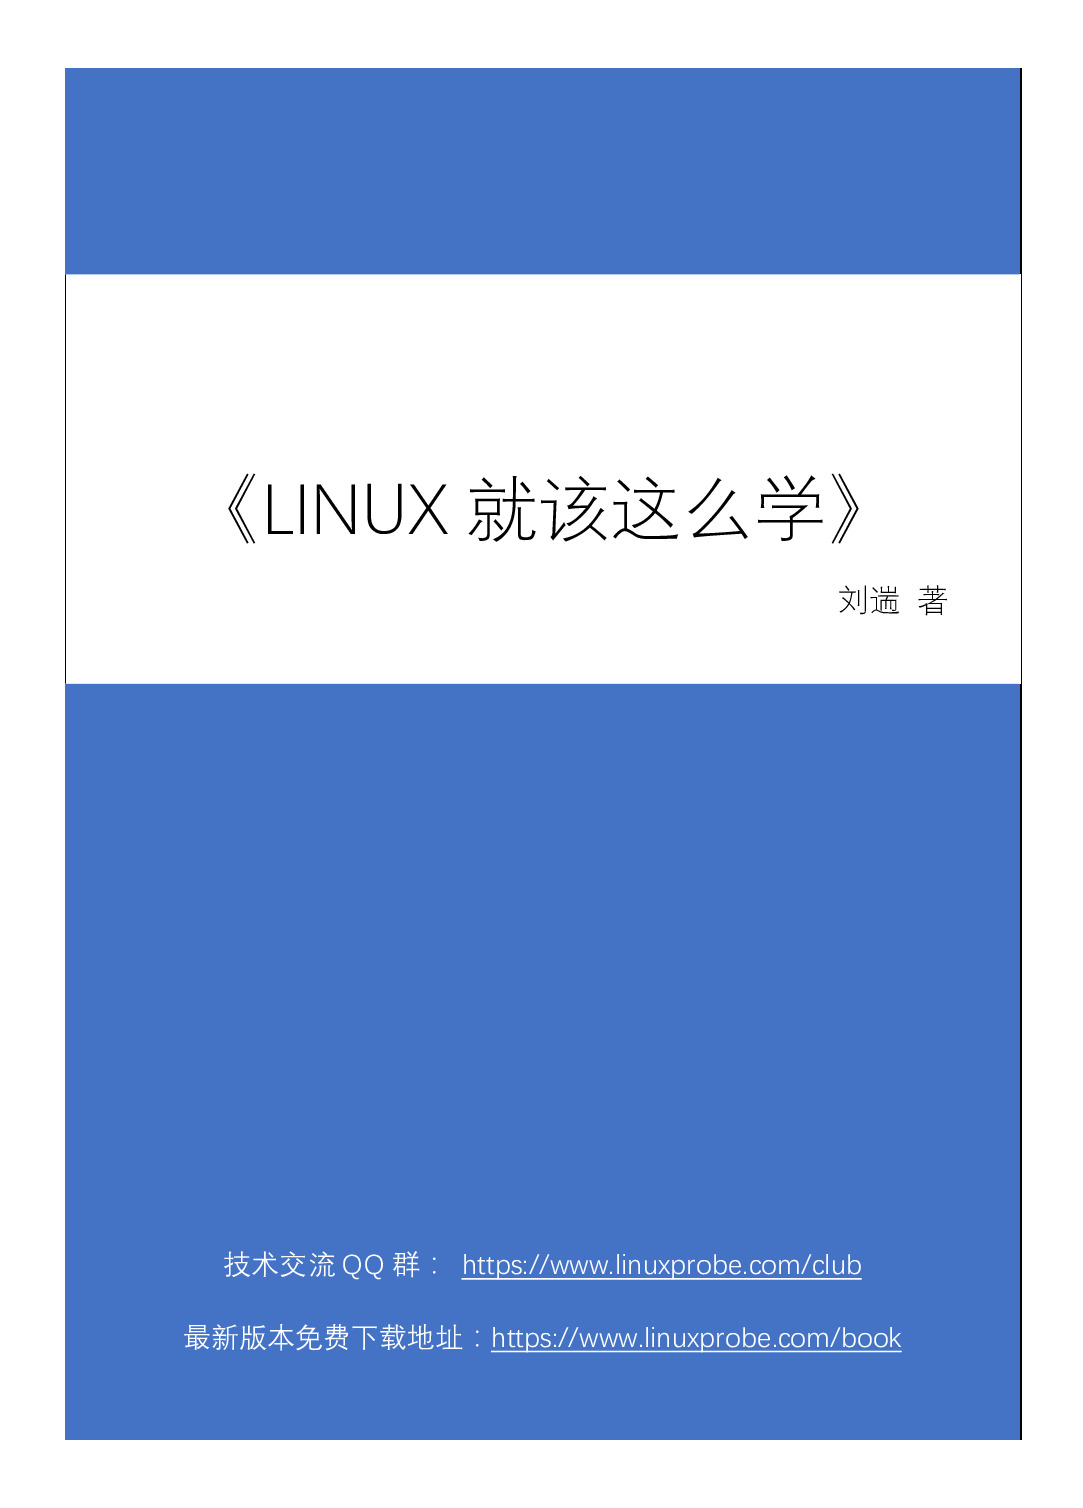 LinuxProbe